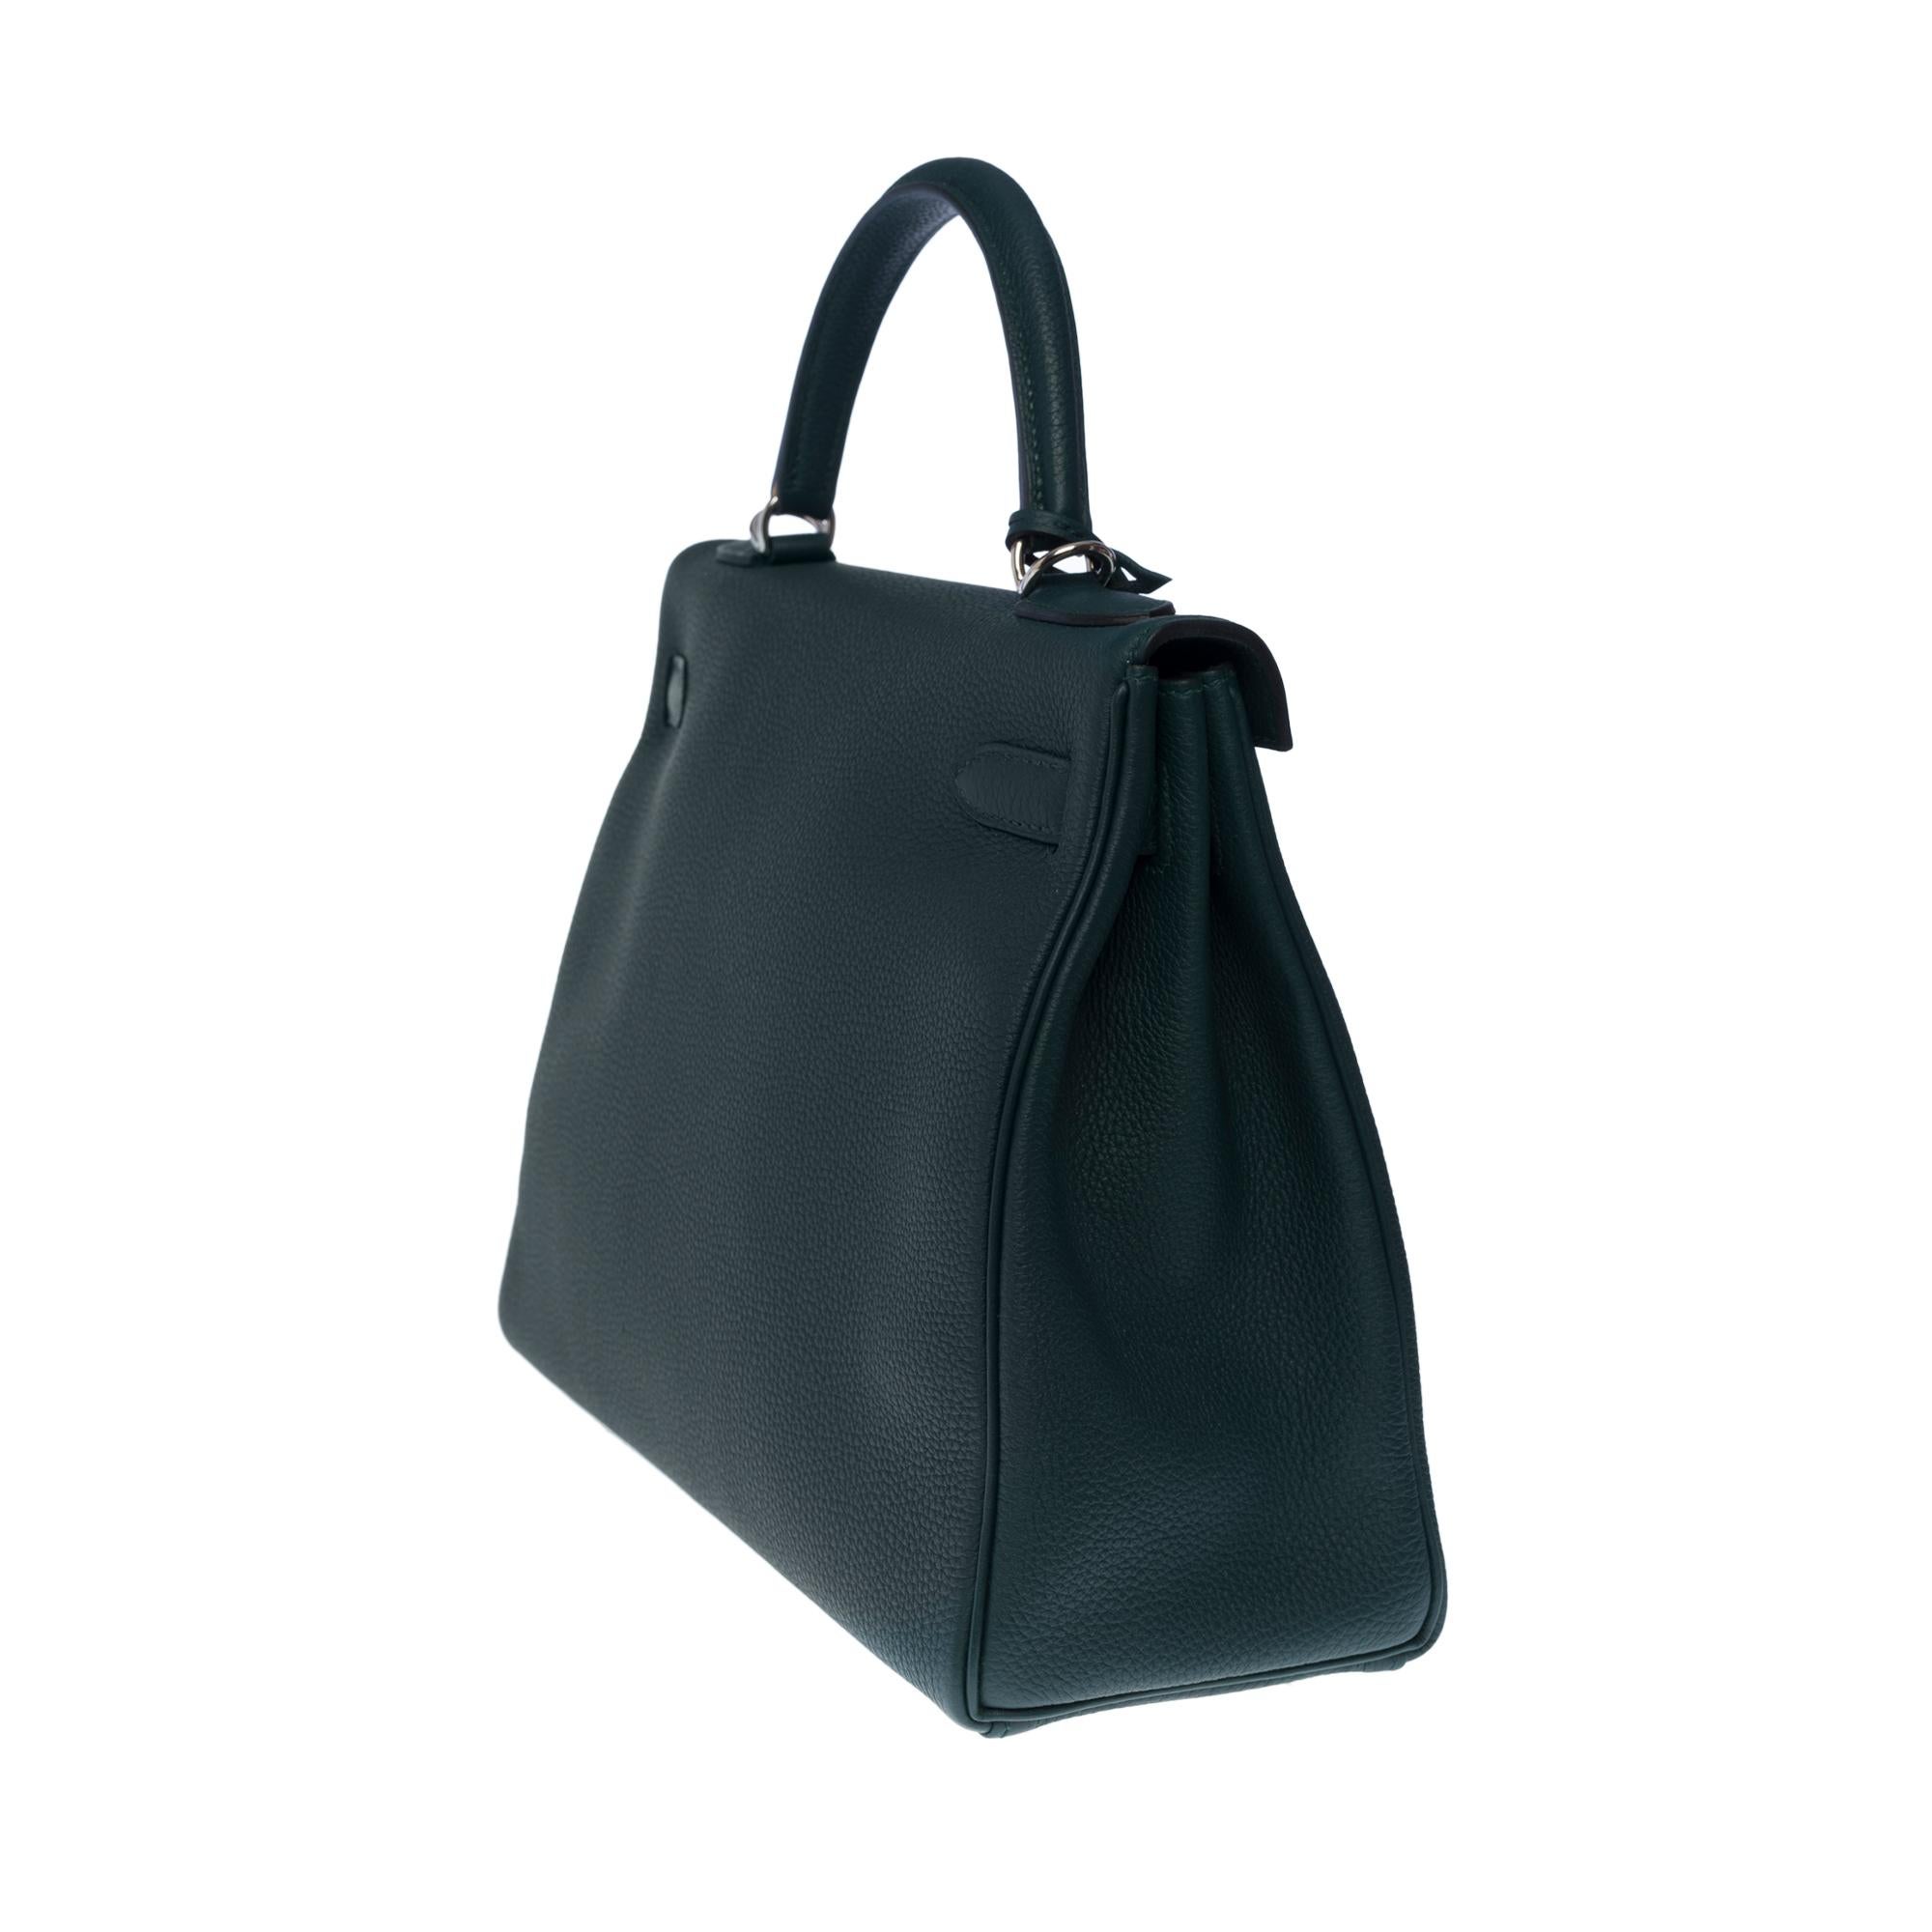 New Hermès Kelly 32 retourne handbag strap in Green Cypres Togo leather, SHW 1